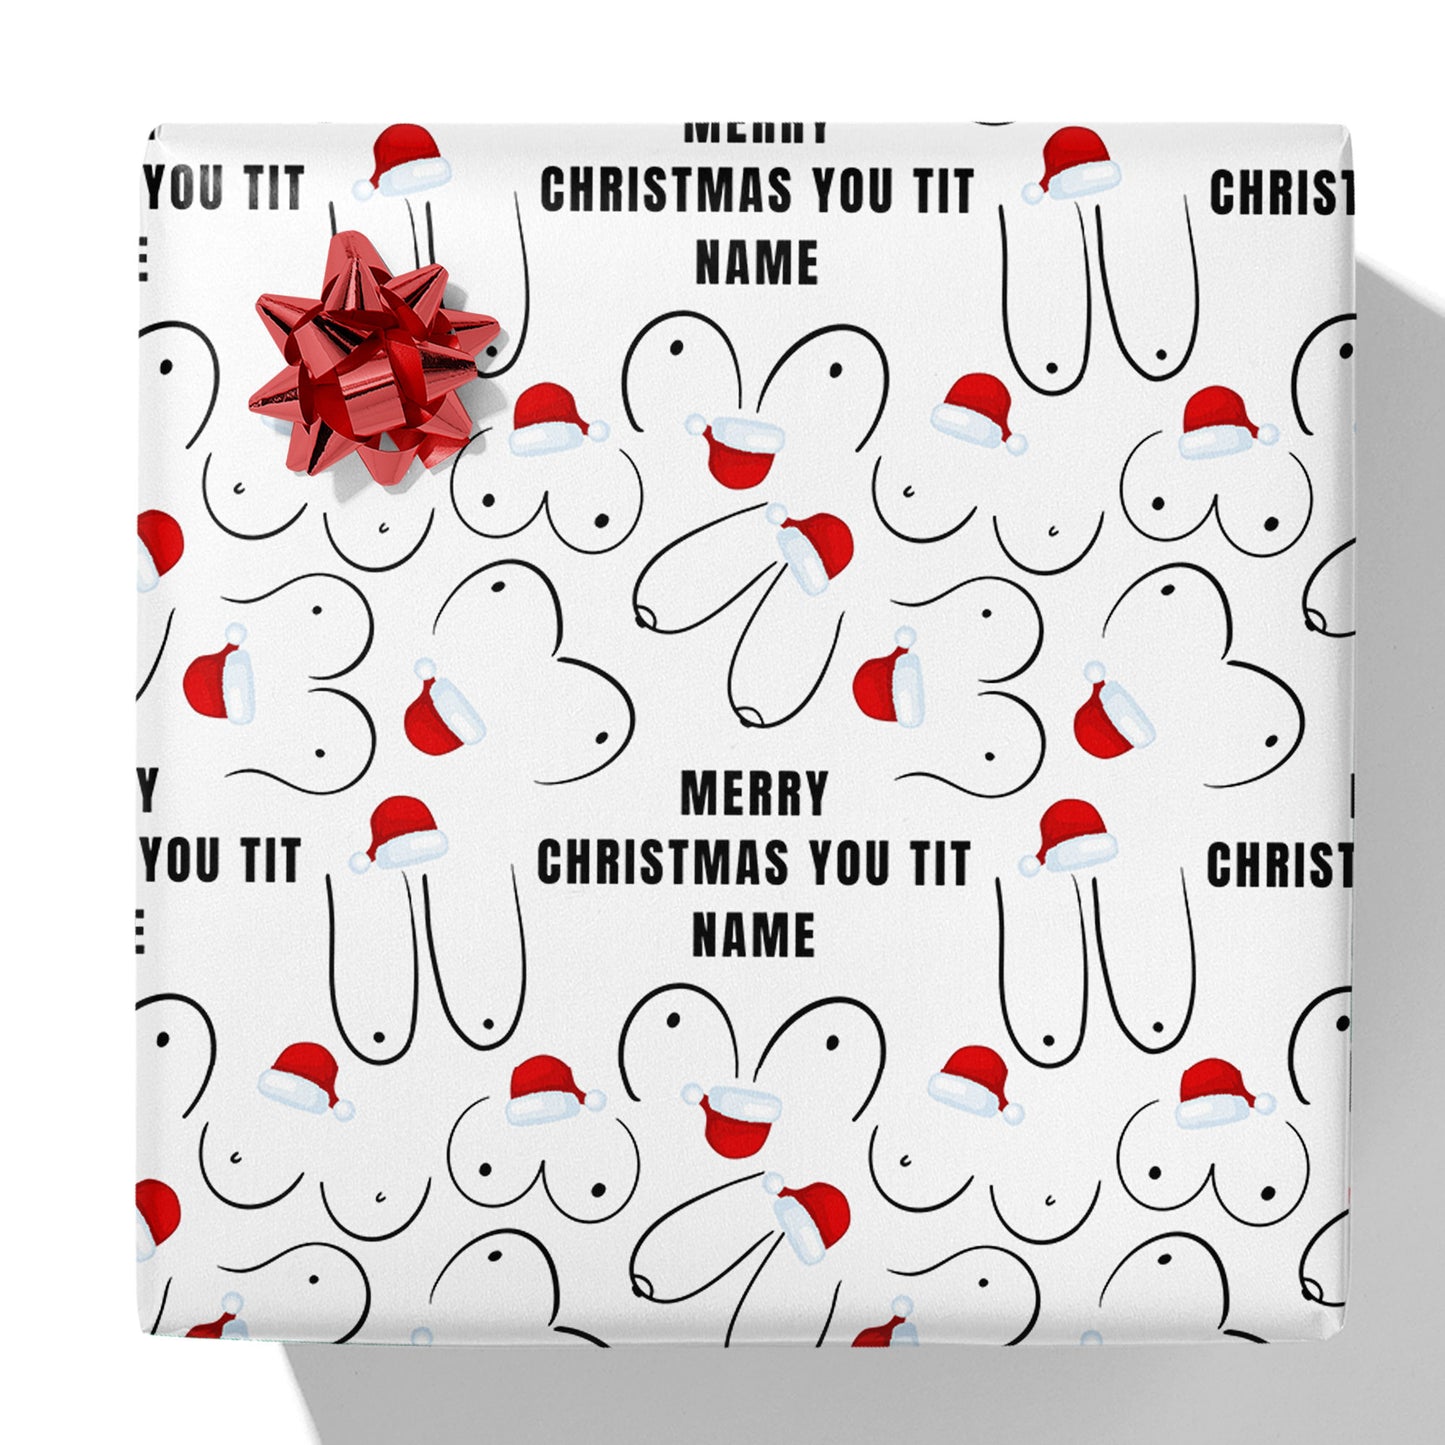 Merry Christmas You Tit Name Gift Wrap